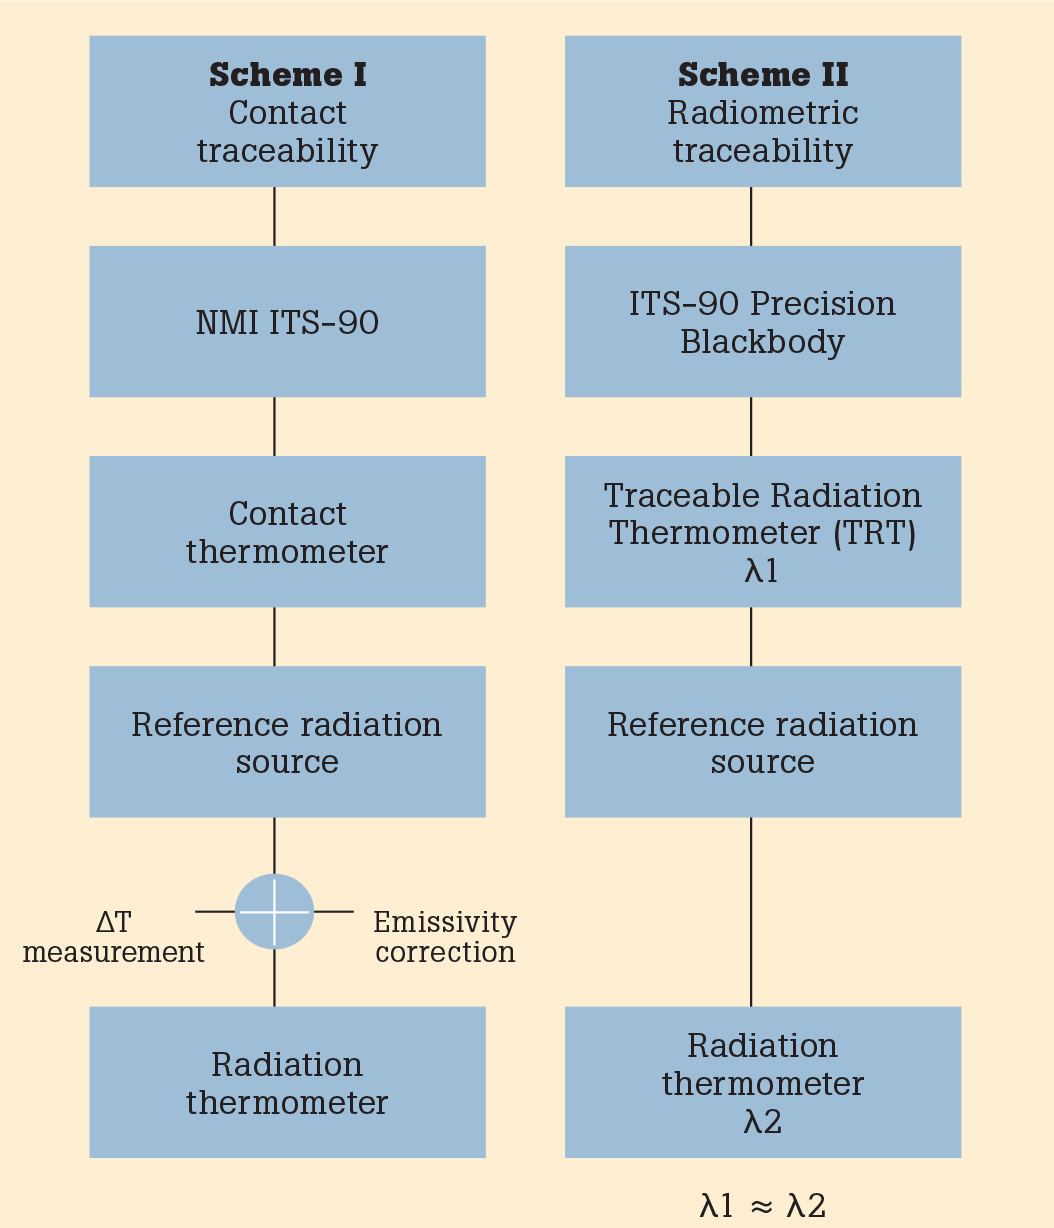 Figure 4. Scheme I (Contact) and Scheme II (Radiometric) Traceability